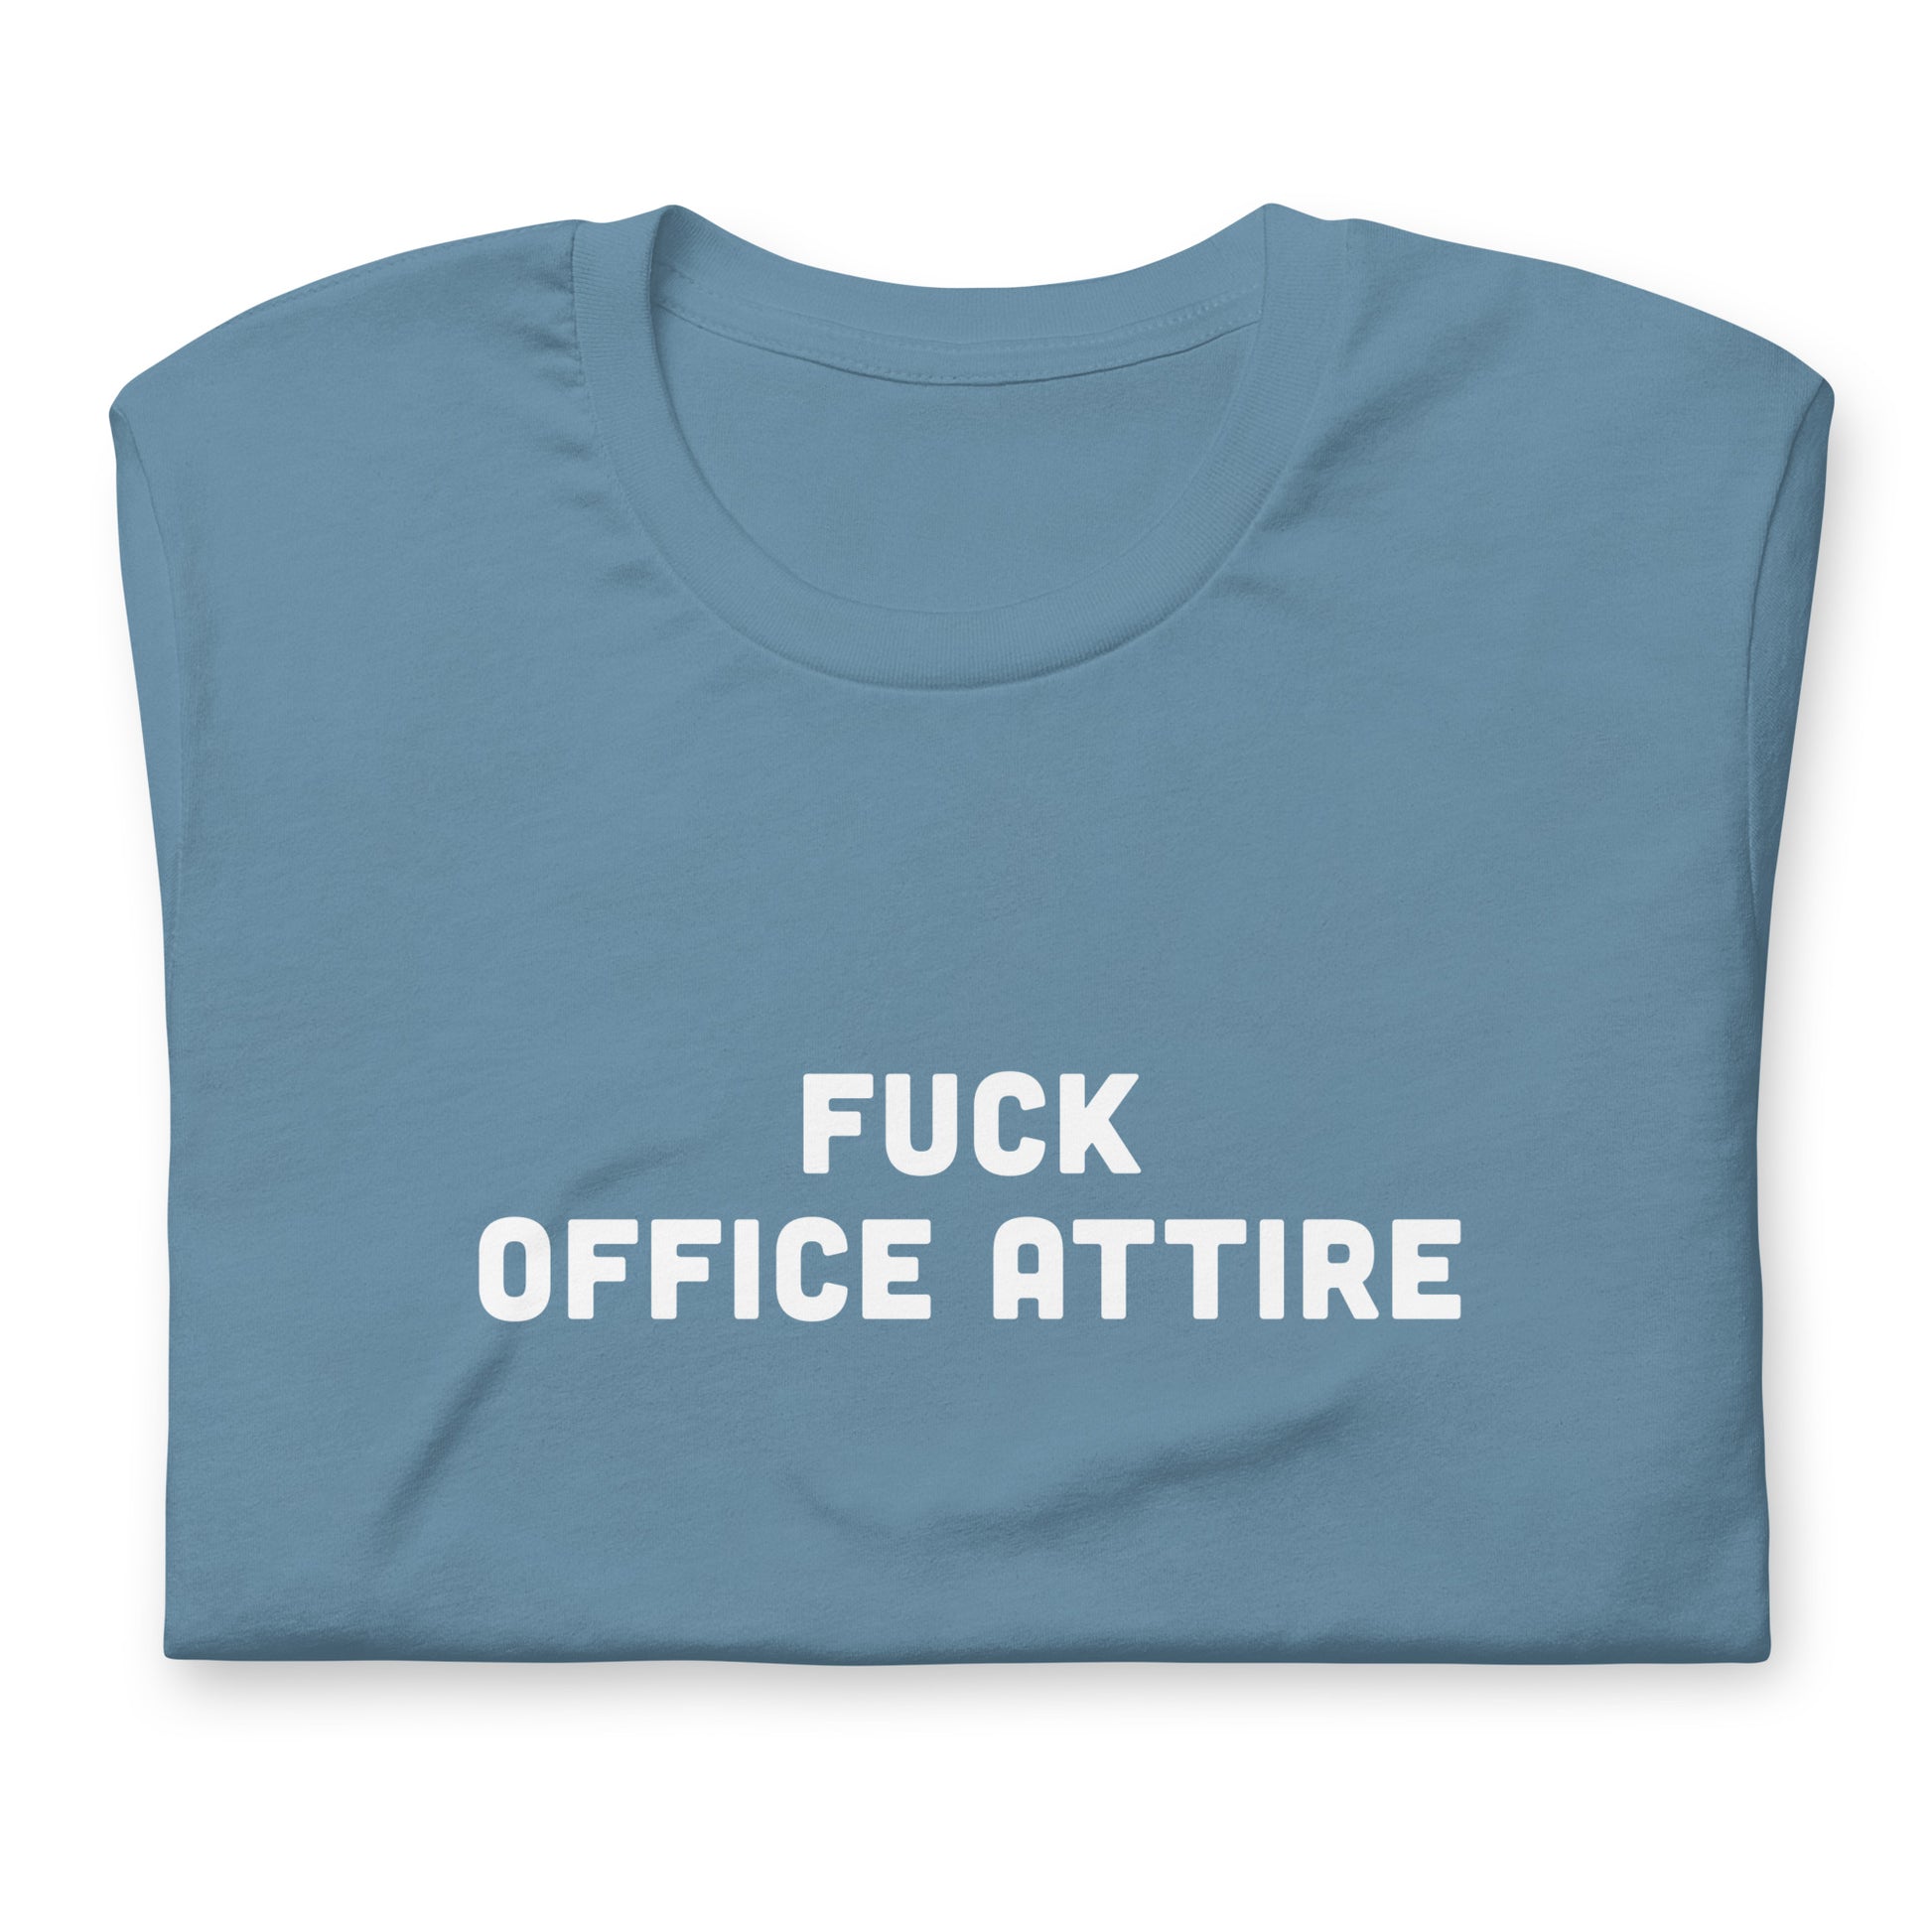 Fuck Office Attire T-Shirt Size M Color Forest